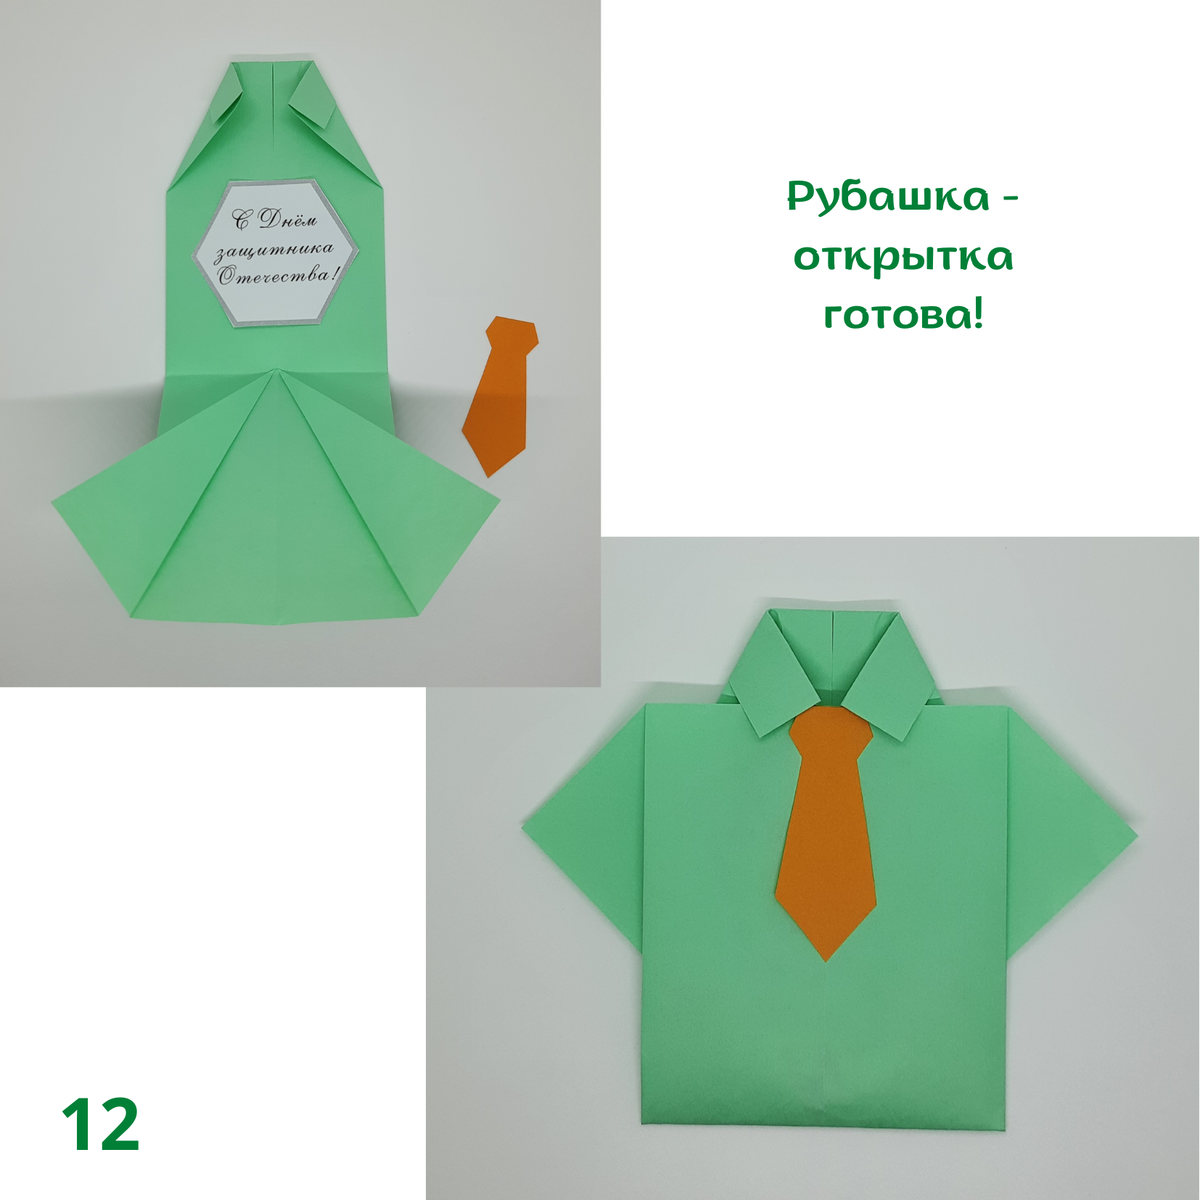 Оригами рубашка с галстуком. Поделка из бумаги.. — Video | VK